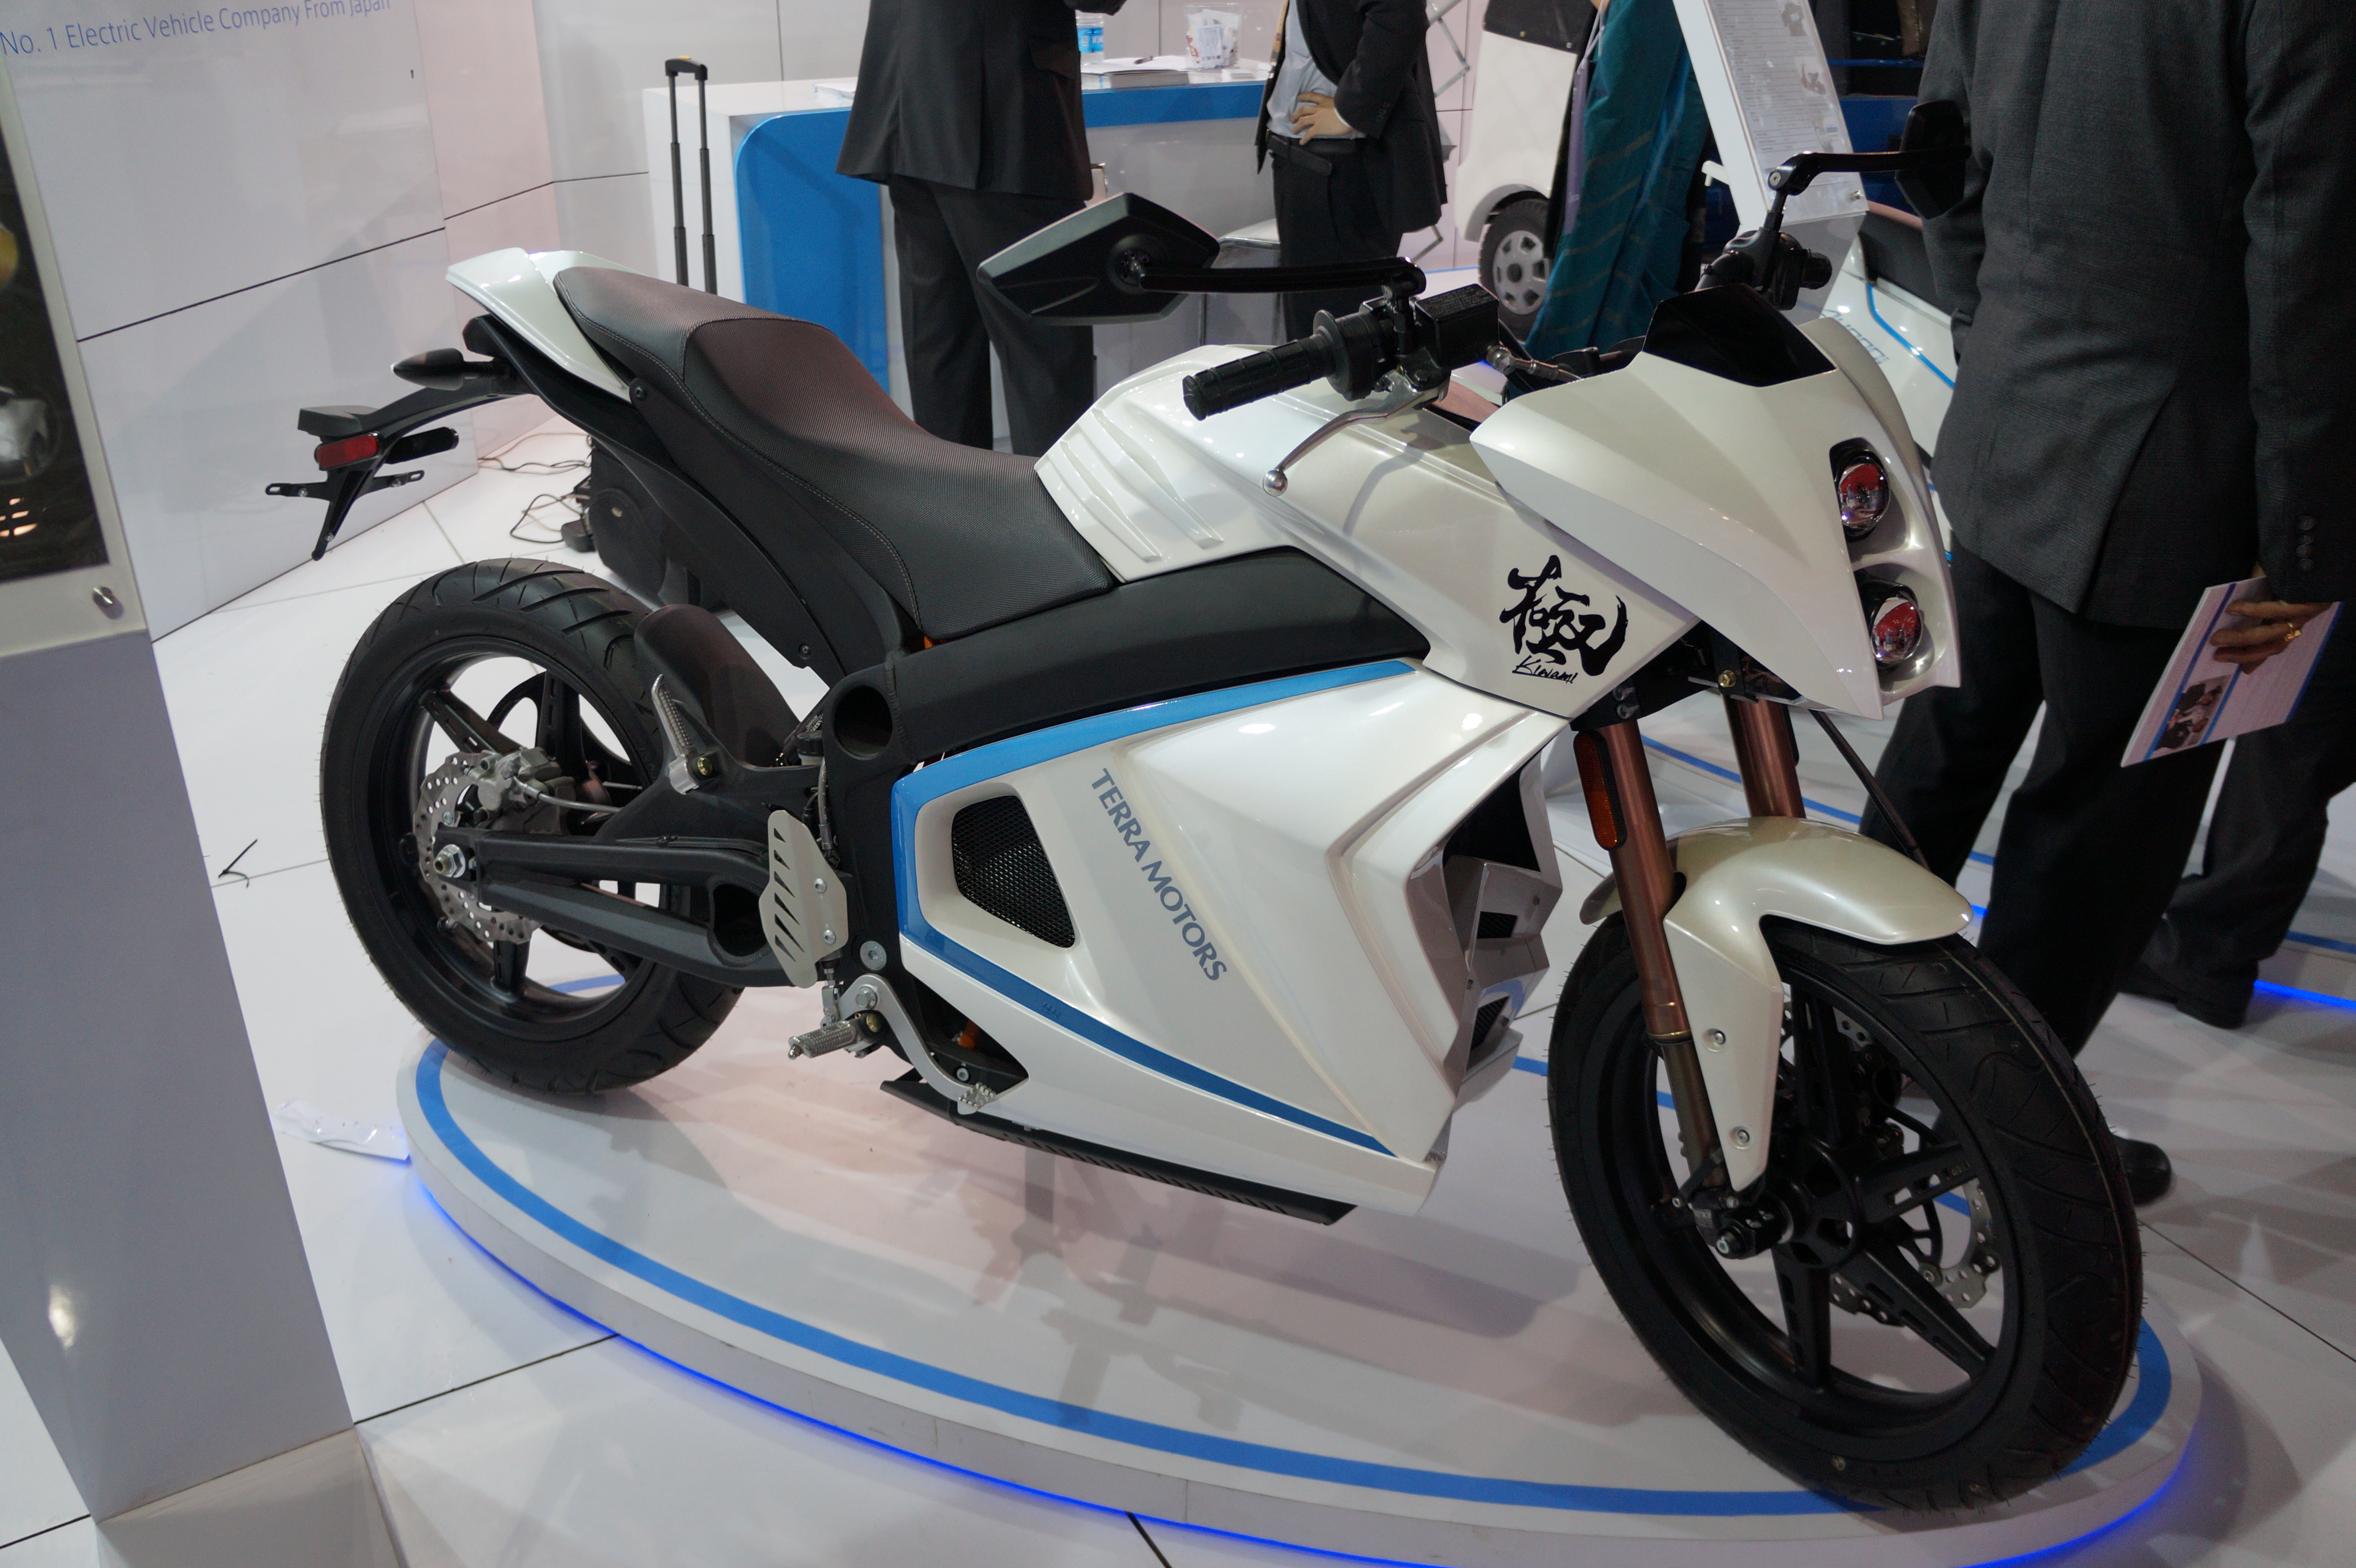 tvs electric bike new launch